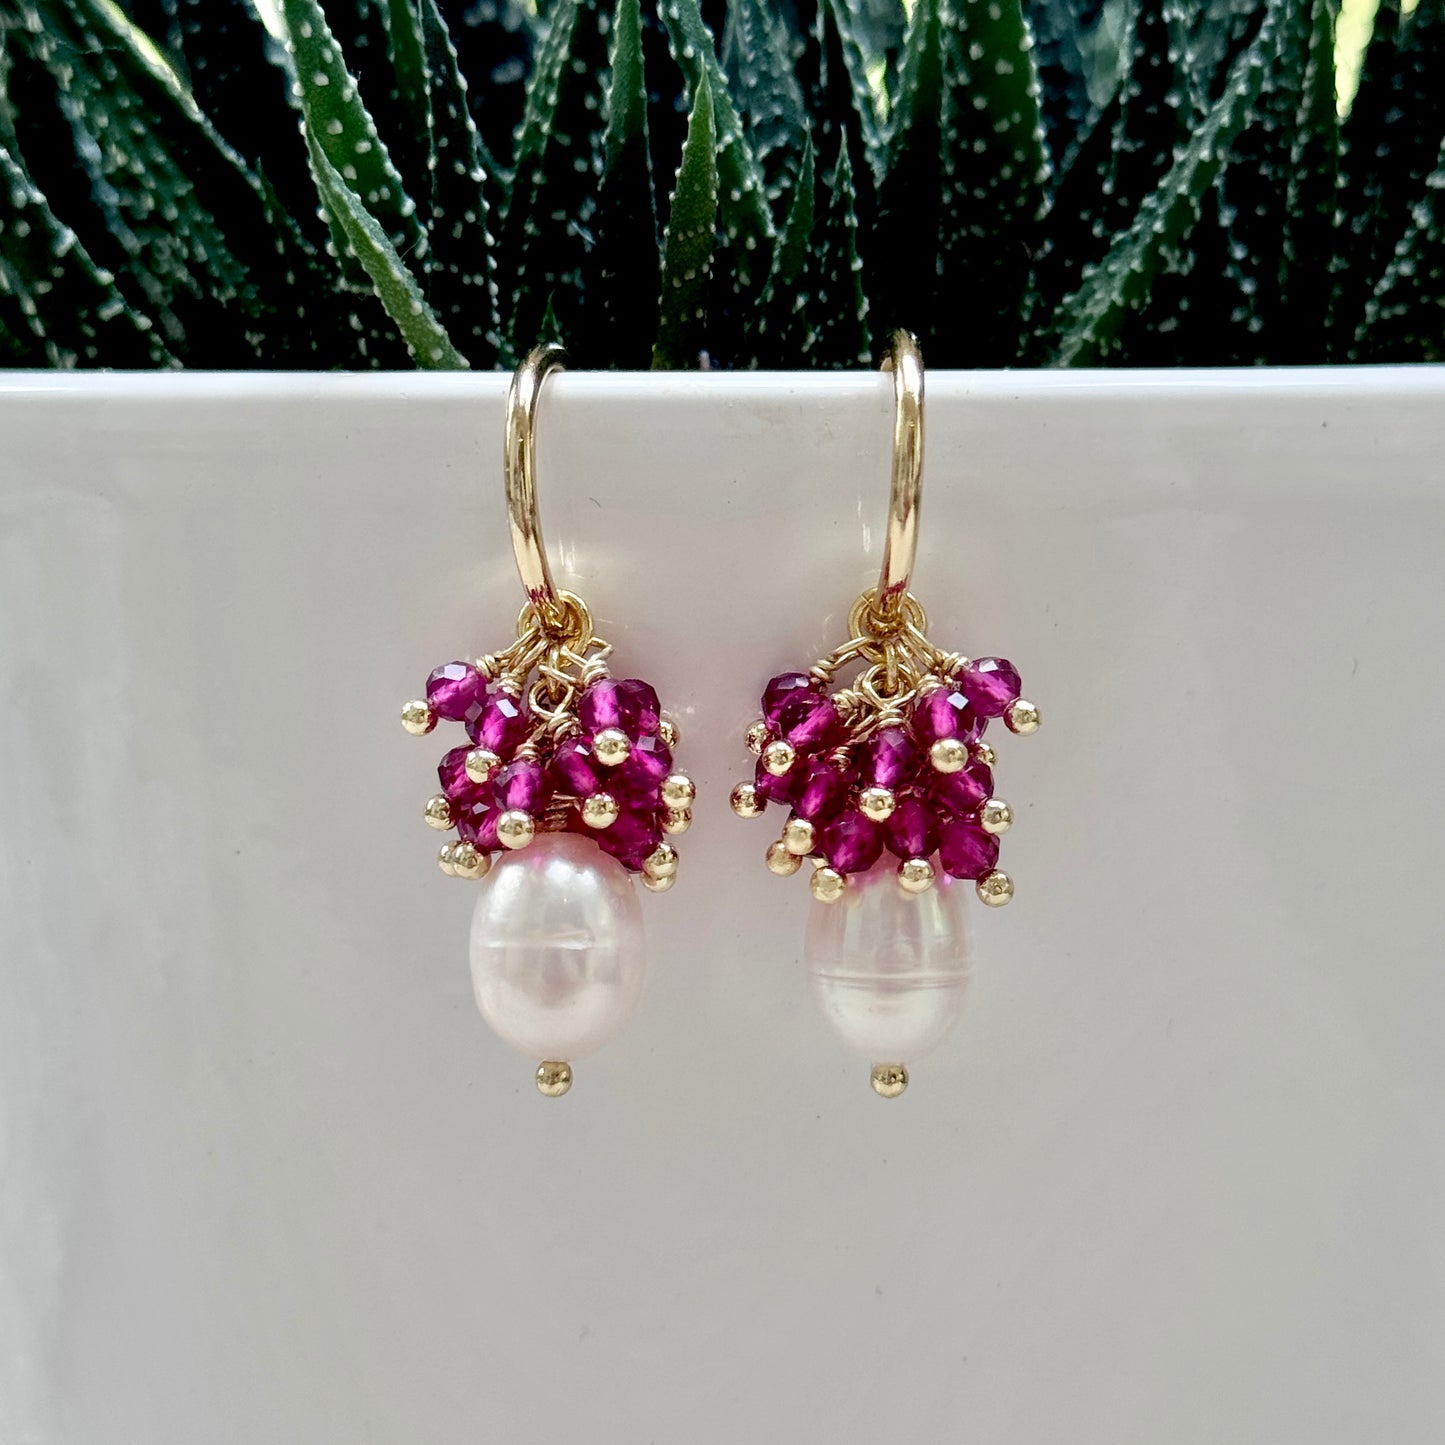 Mini Hoop Earrings With Ibiza Pearl & Pink Garnet Drops